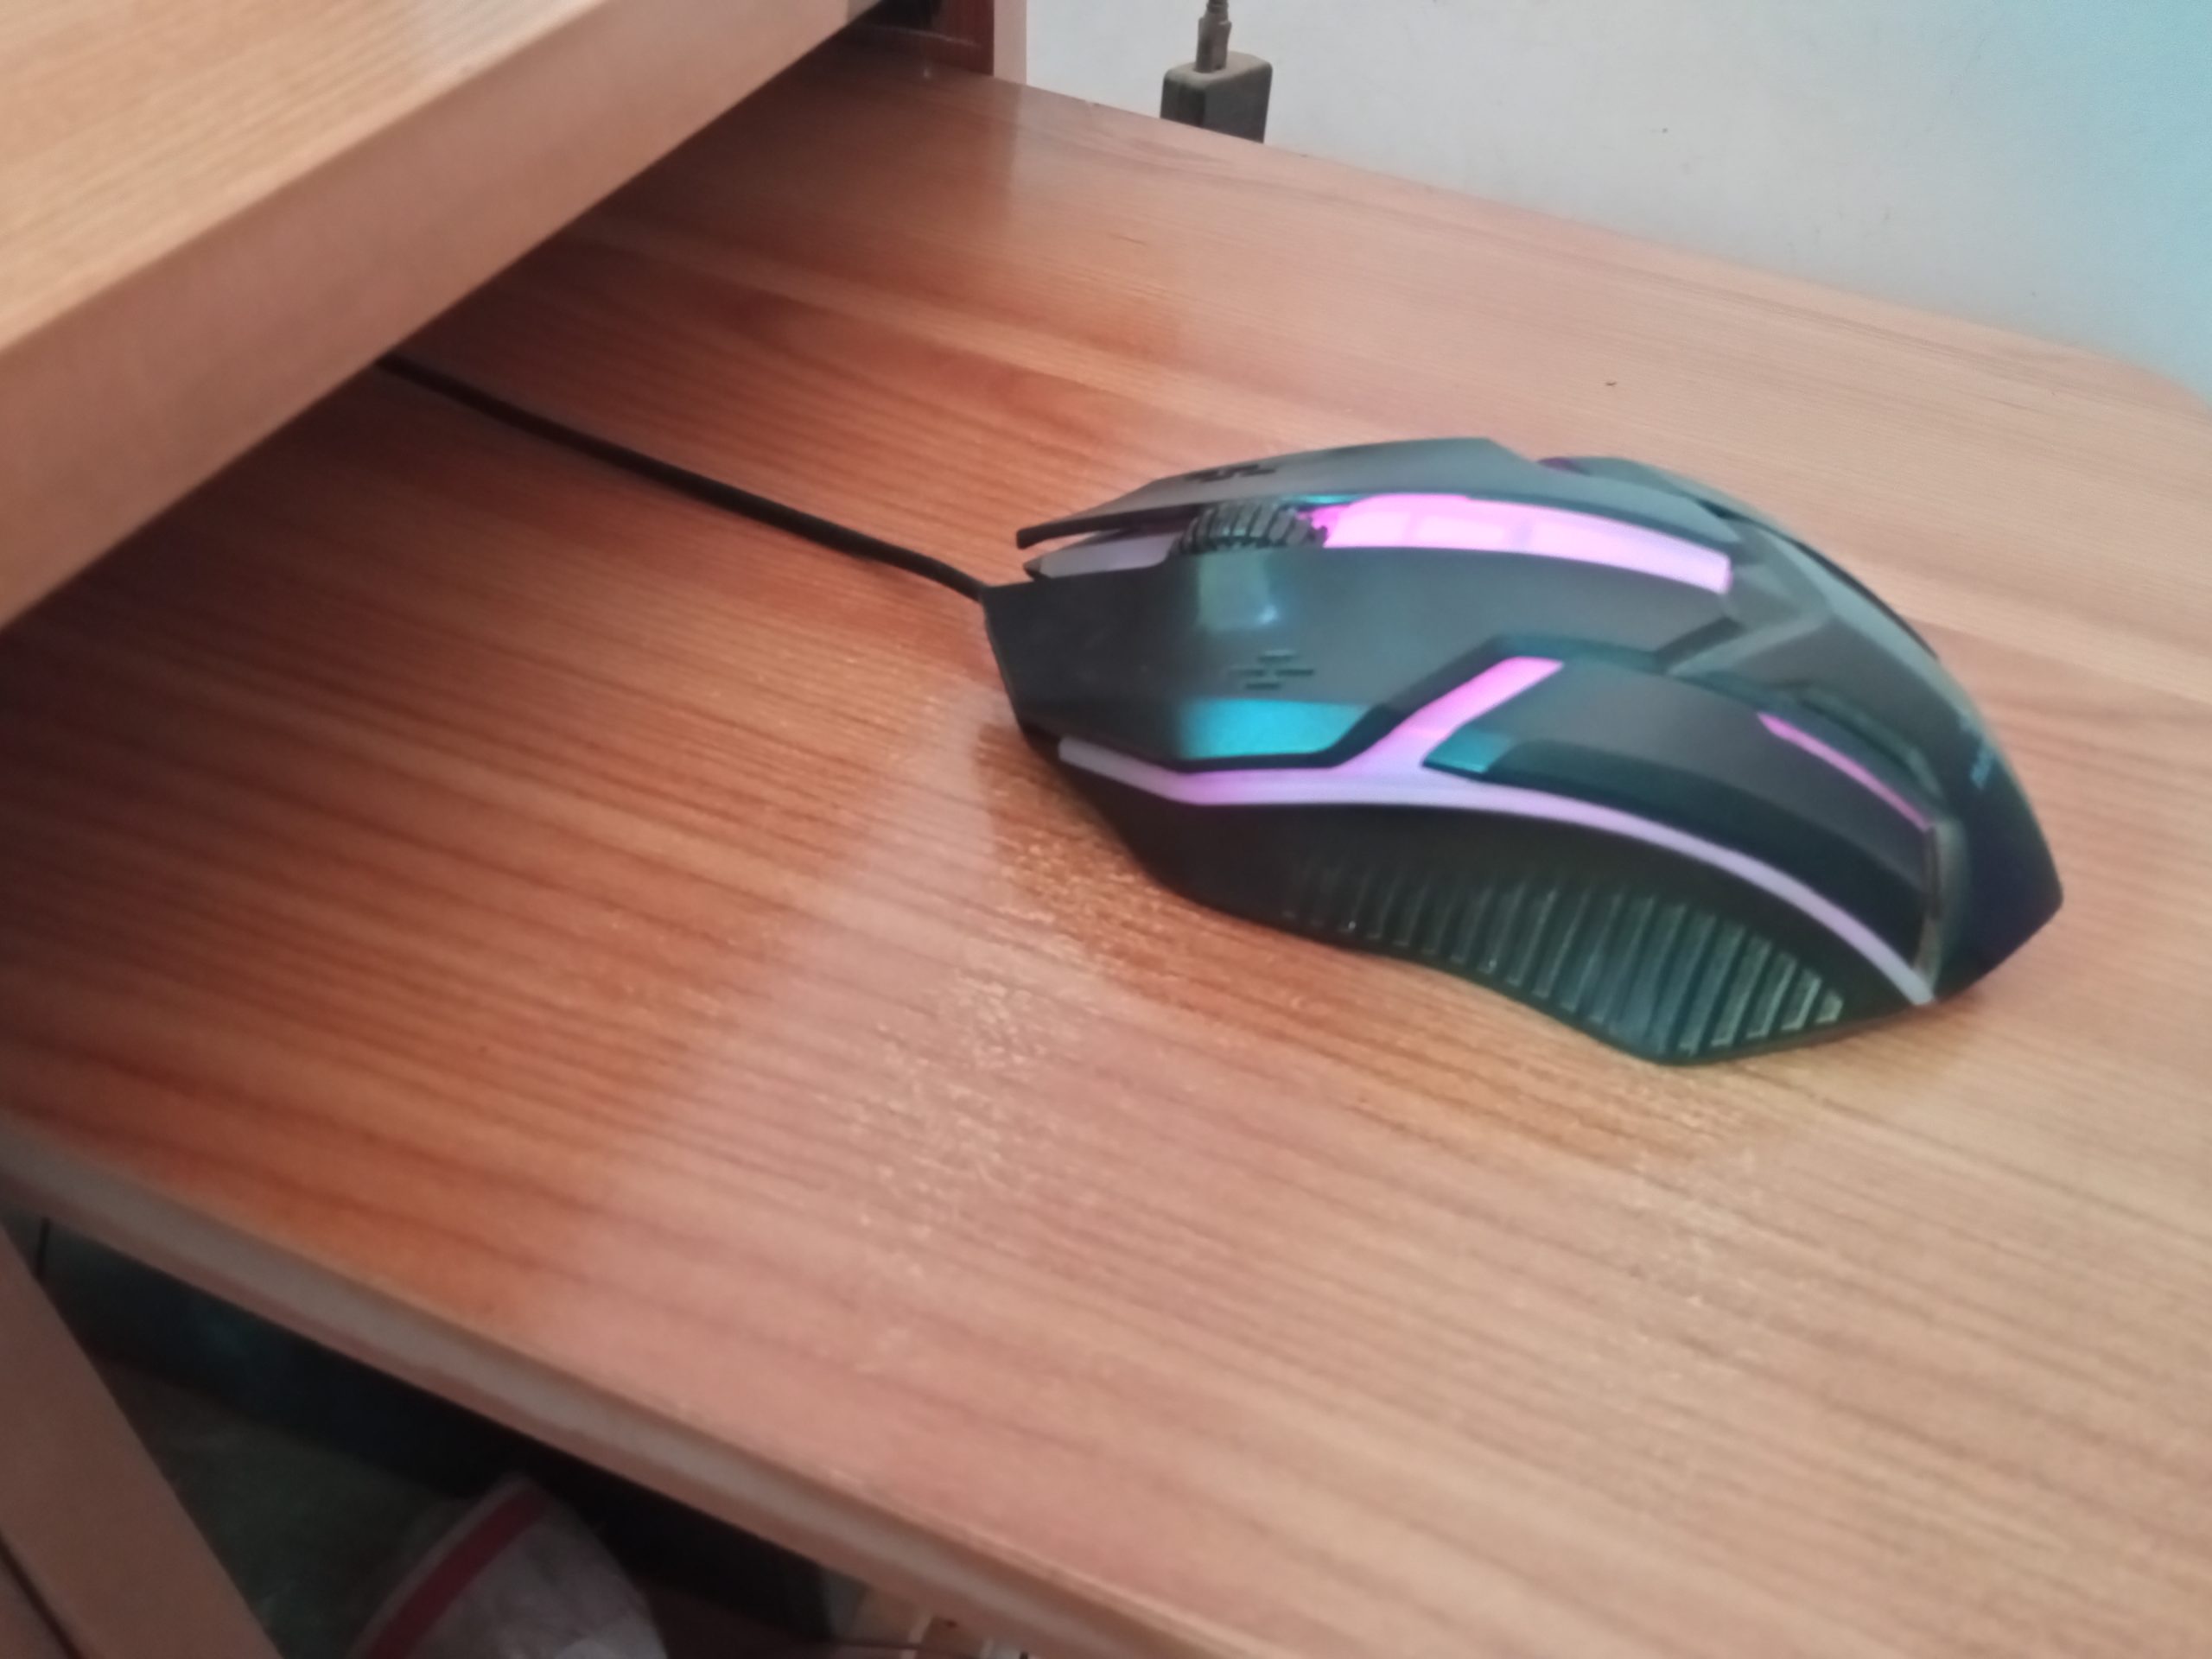 Mouse device of a desktop computer